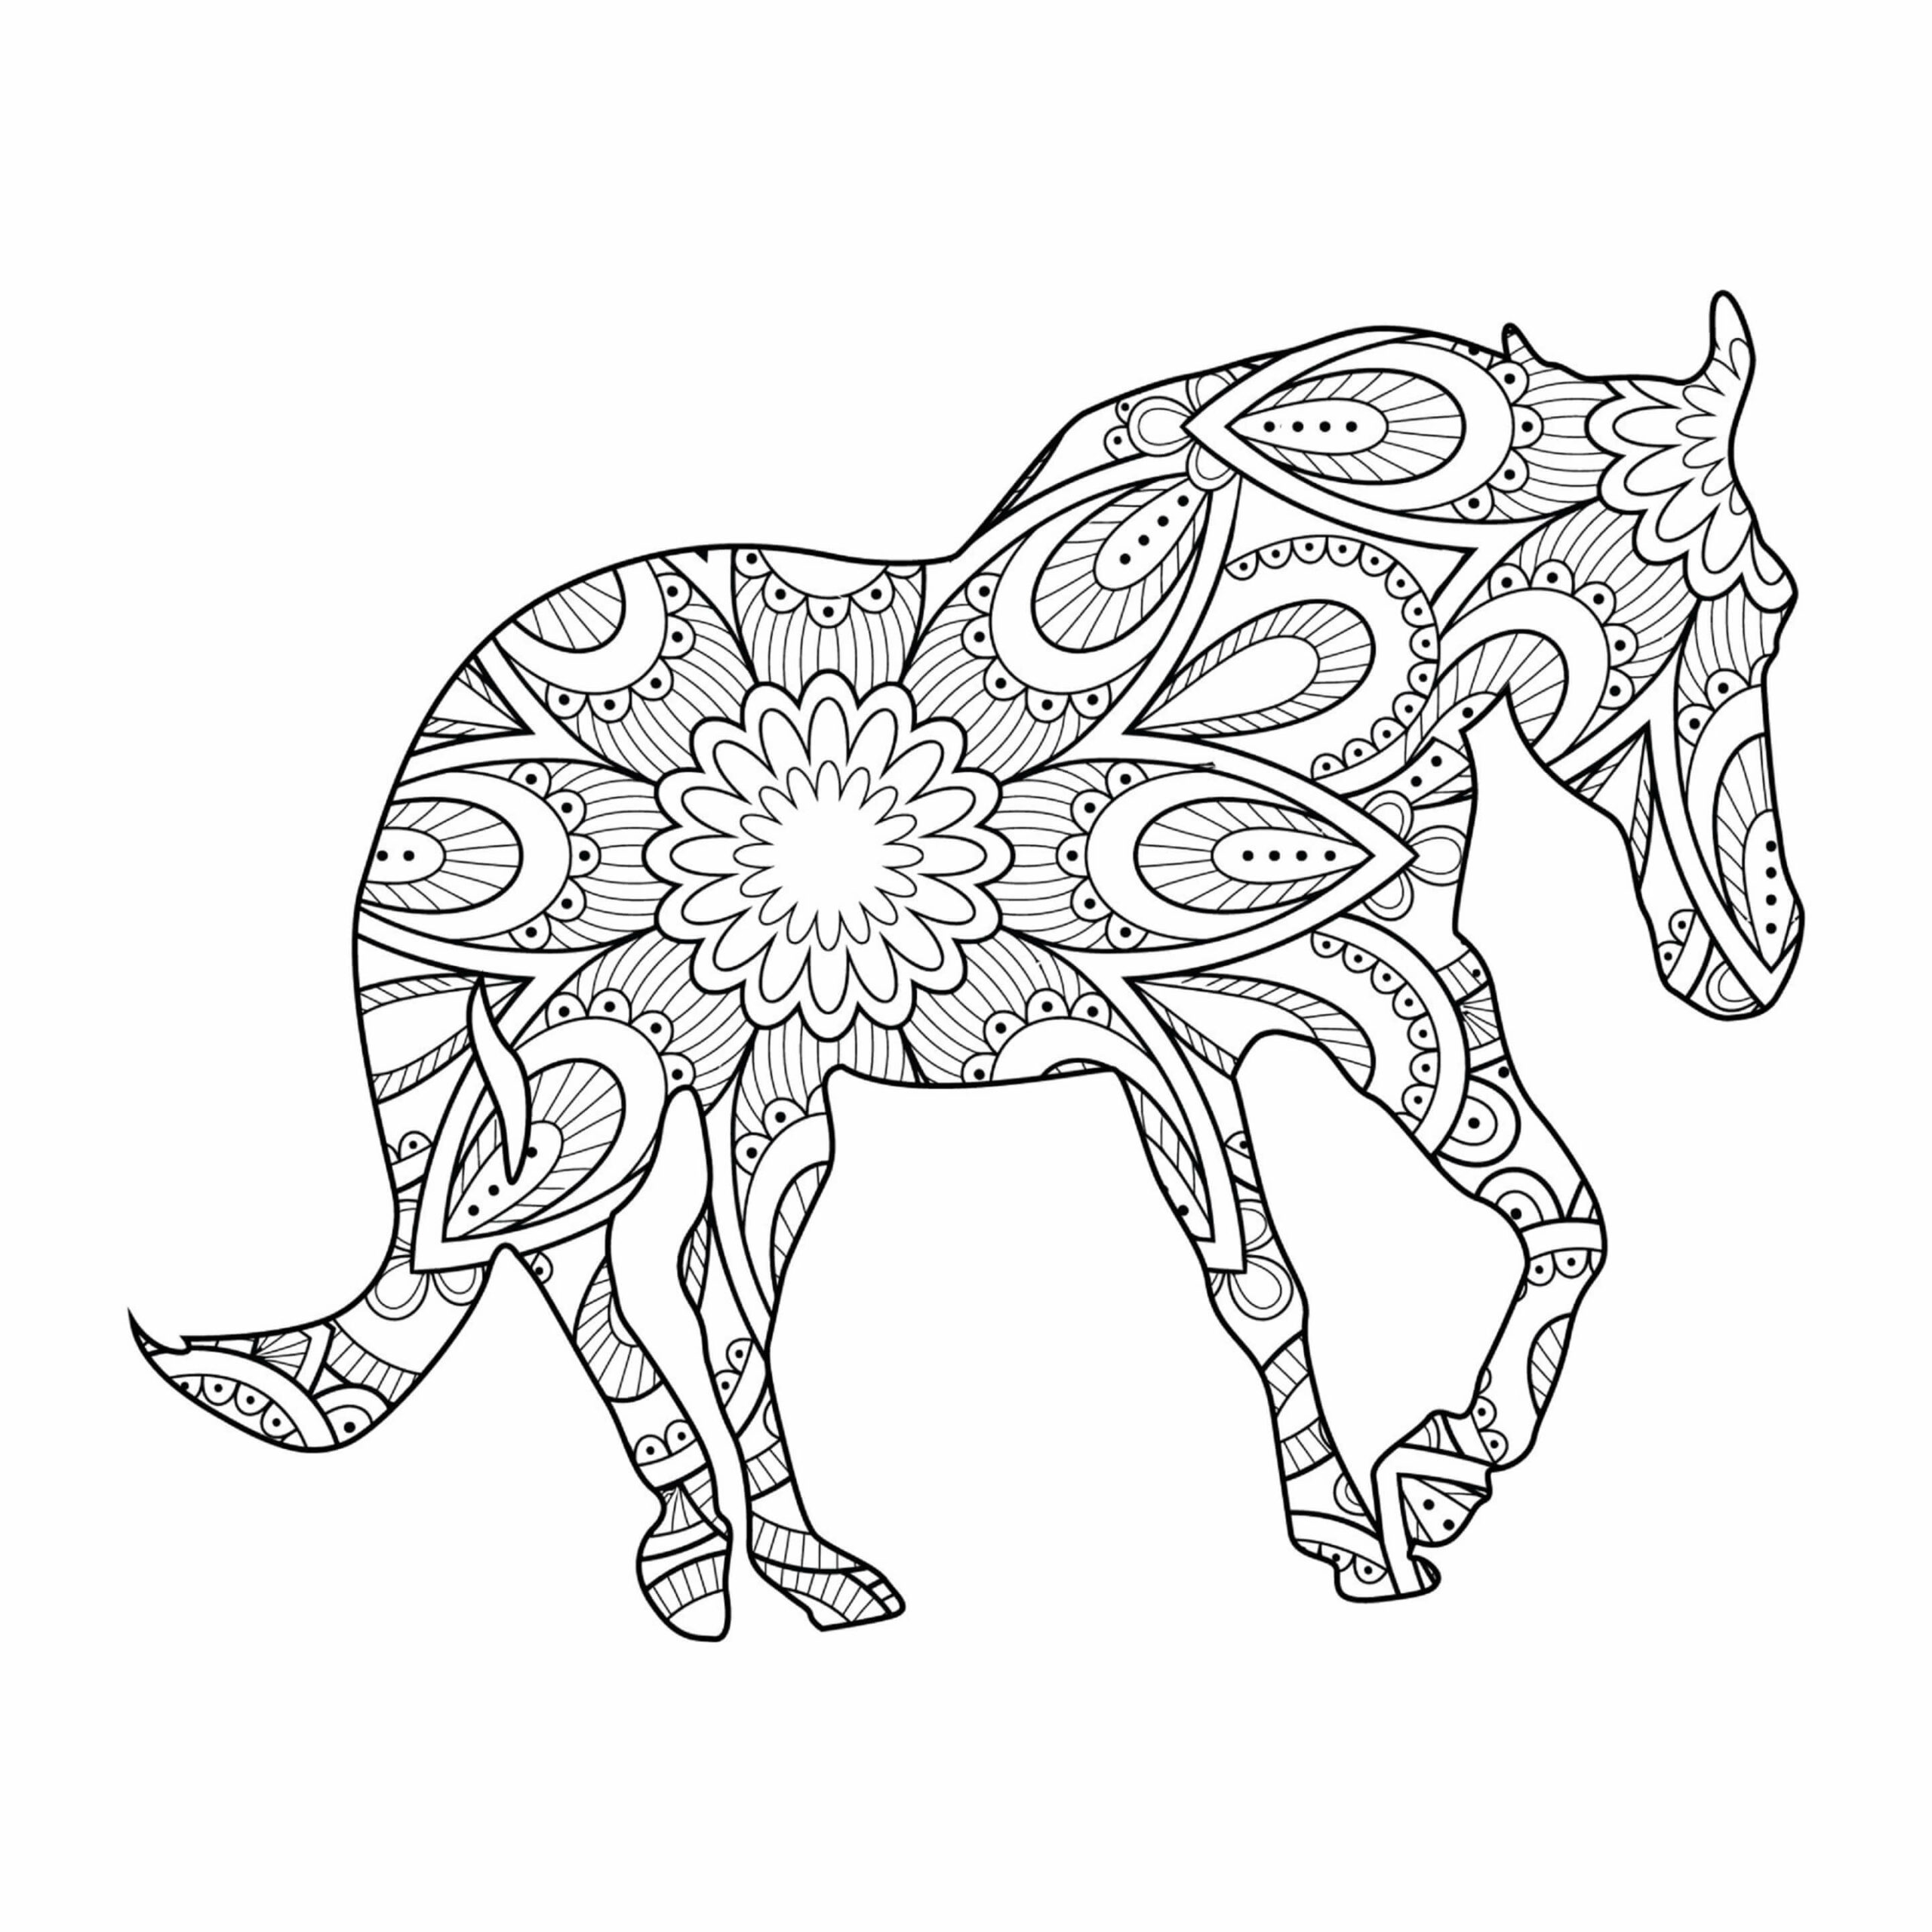 Mandala Horse Coloring Page – Sheet 5 Mandalas